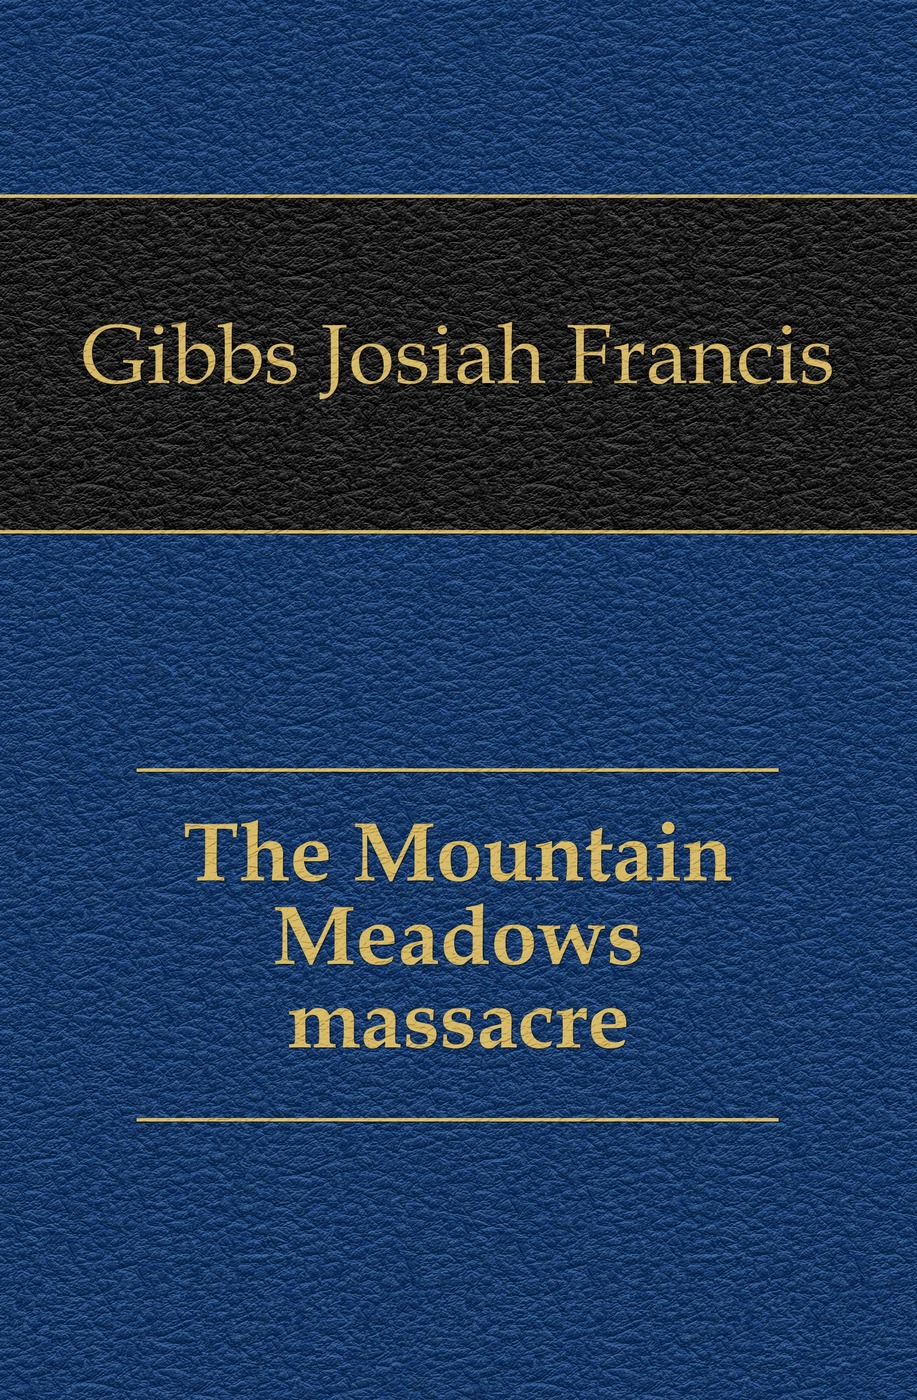 The Mountain Meadows massacre